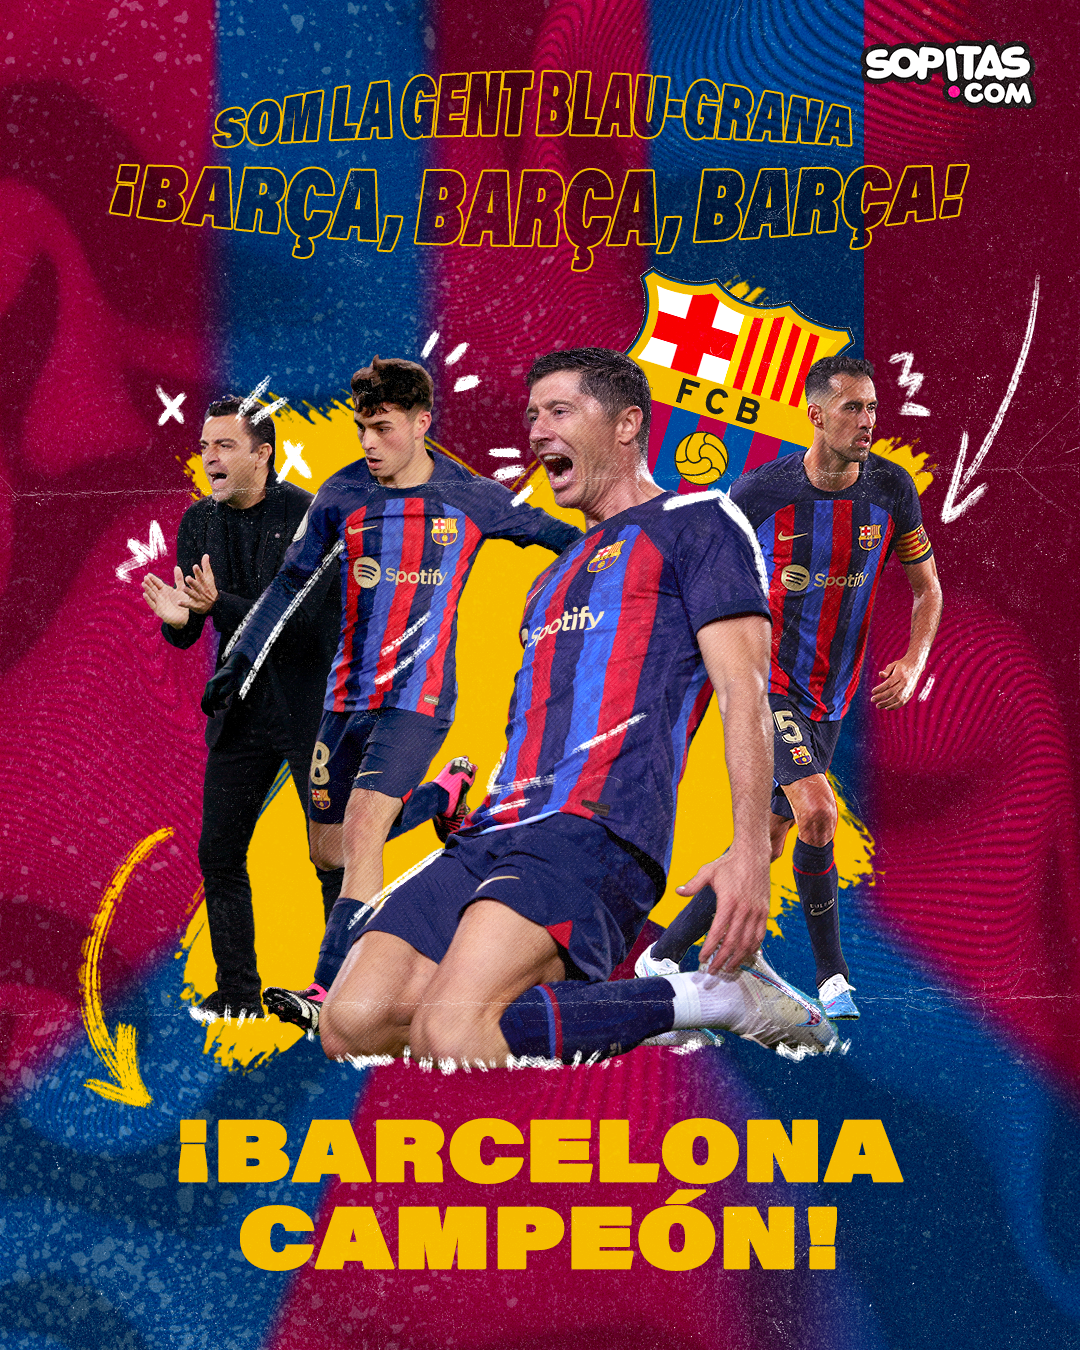 Barcelona was crowned in La Liga of Spain